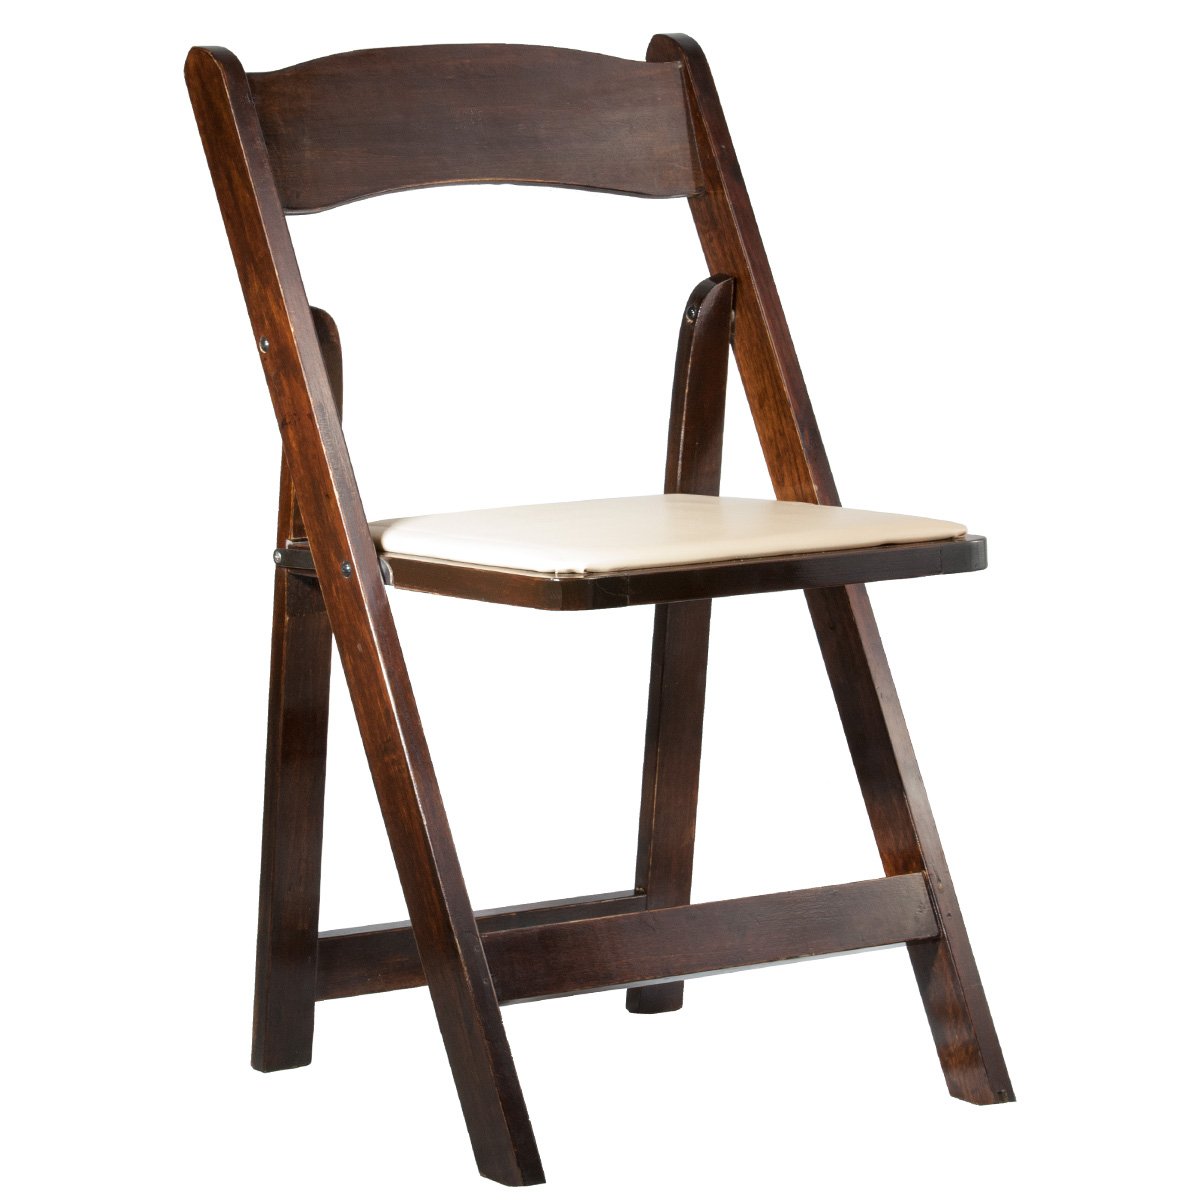 dark-wood-chair.jpg